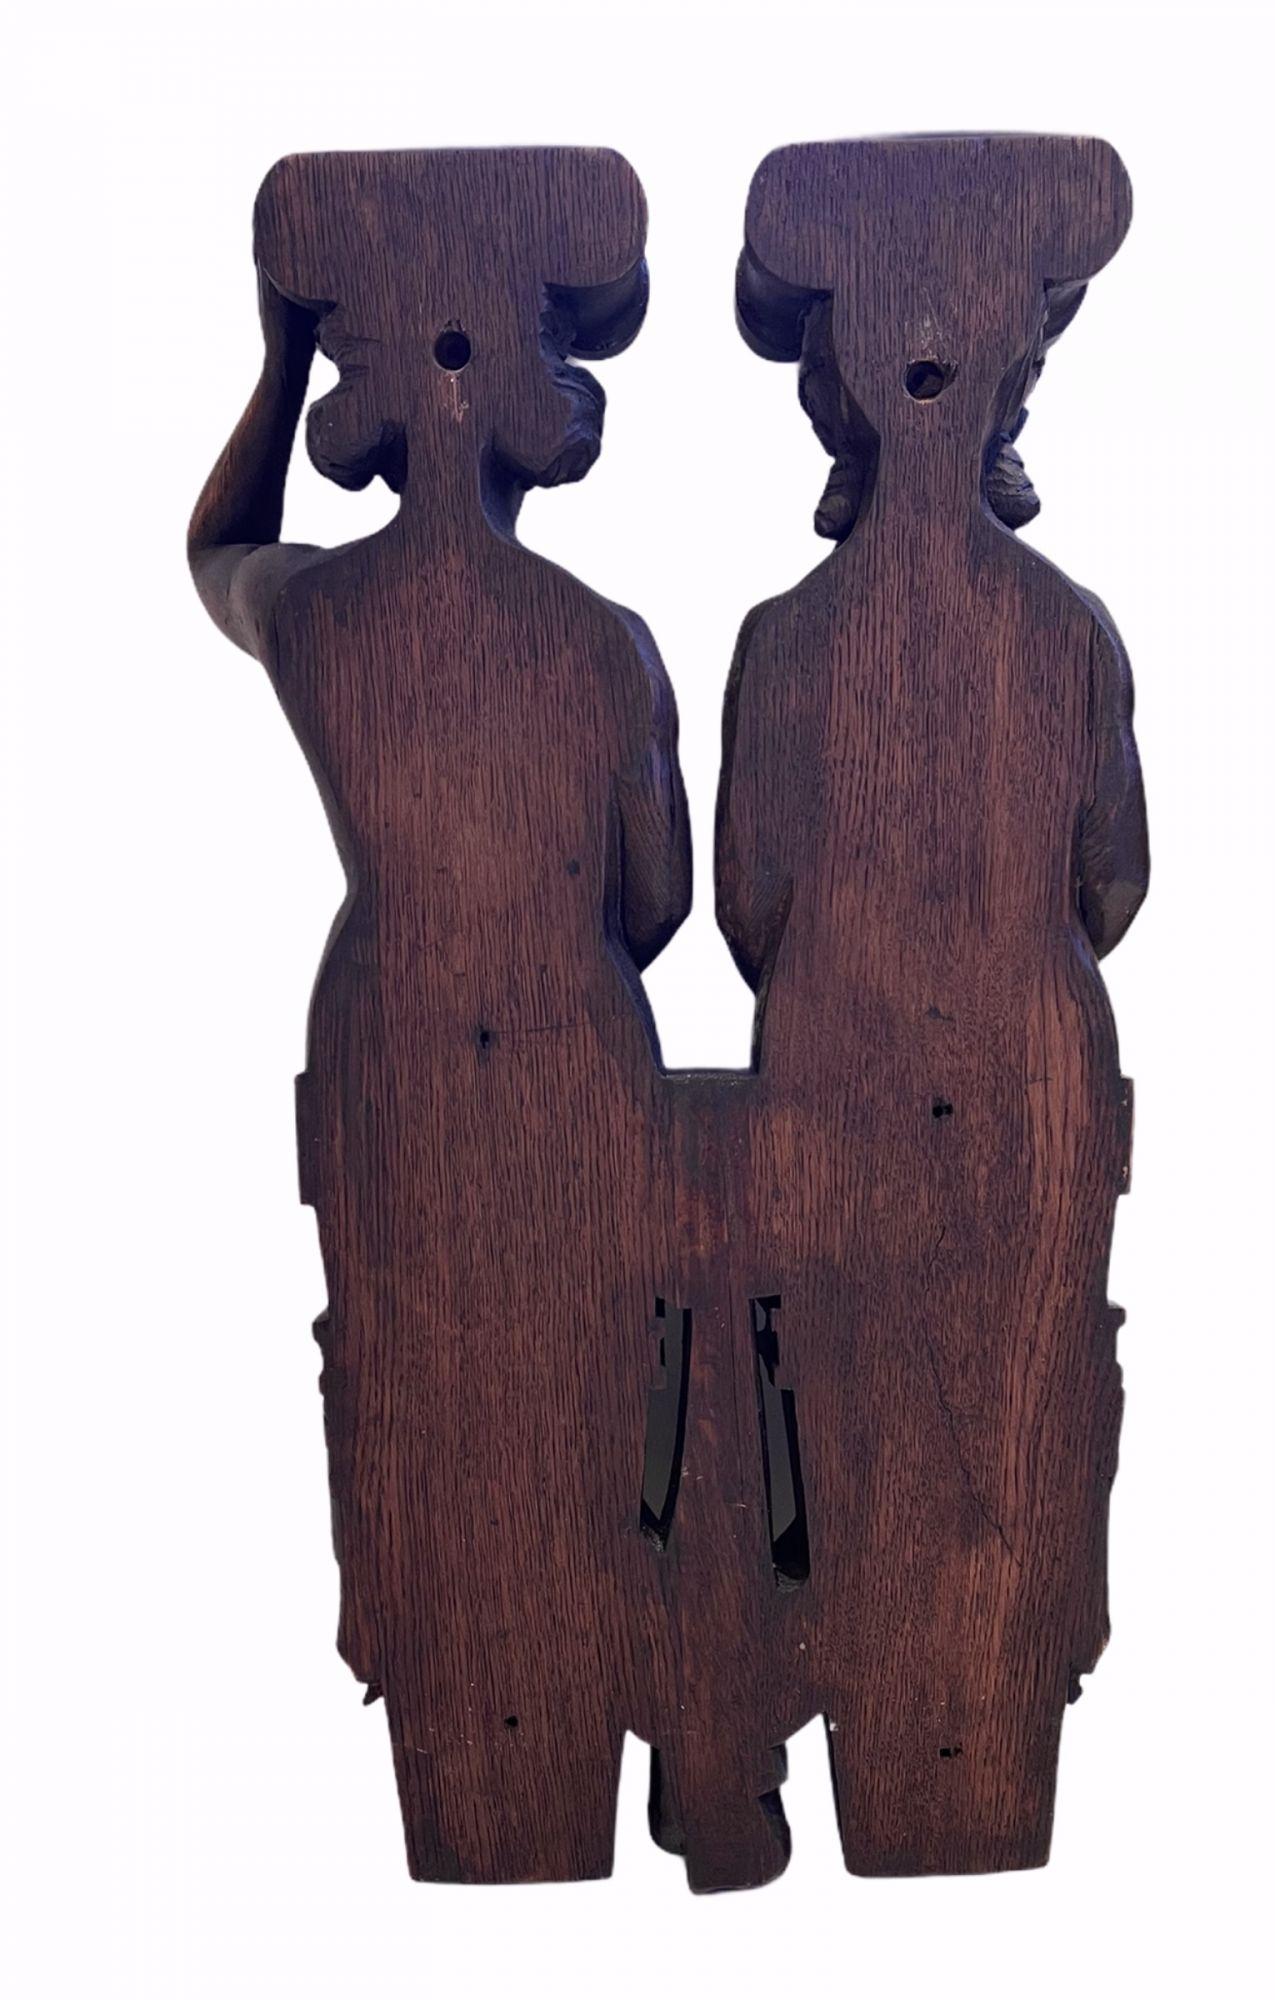 Early 19th Century Pair of German Oak Caryatidal Figures Depicting Historicism For Sale 8